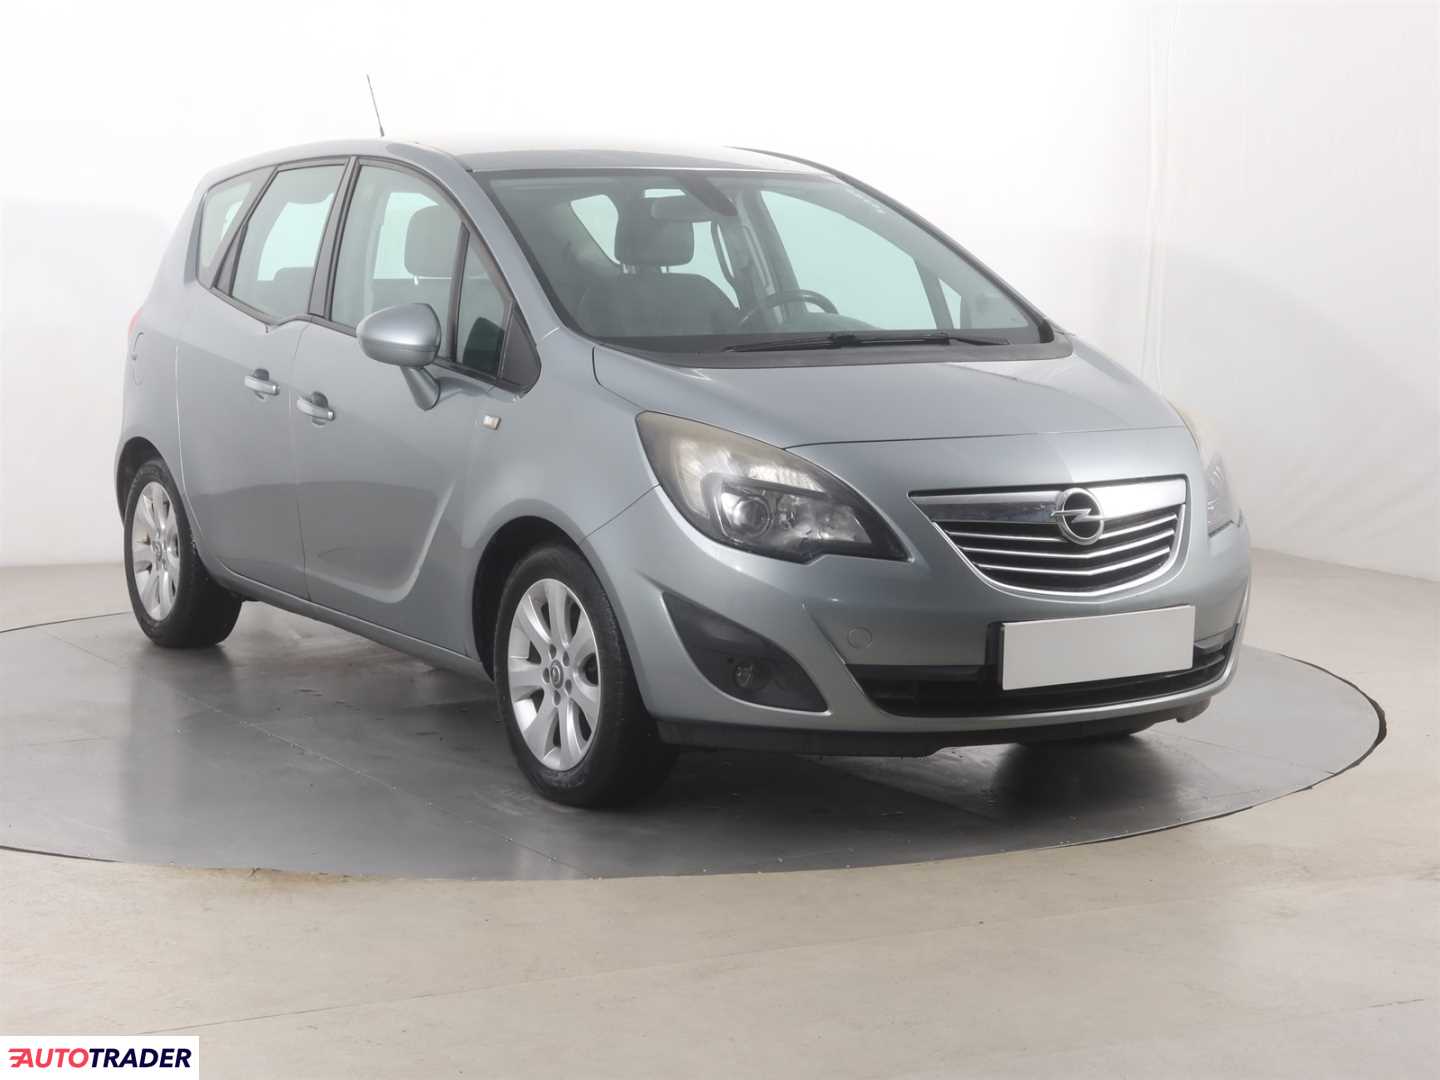 Opel Meriva 2010 1.4 118 KM